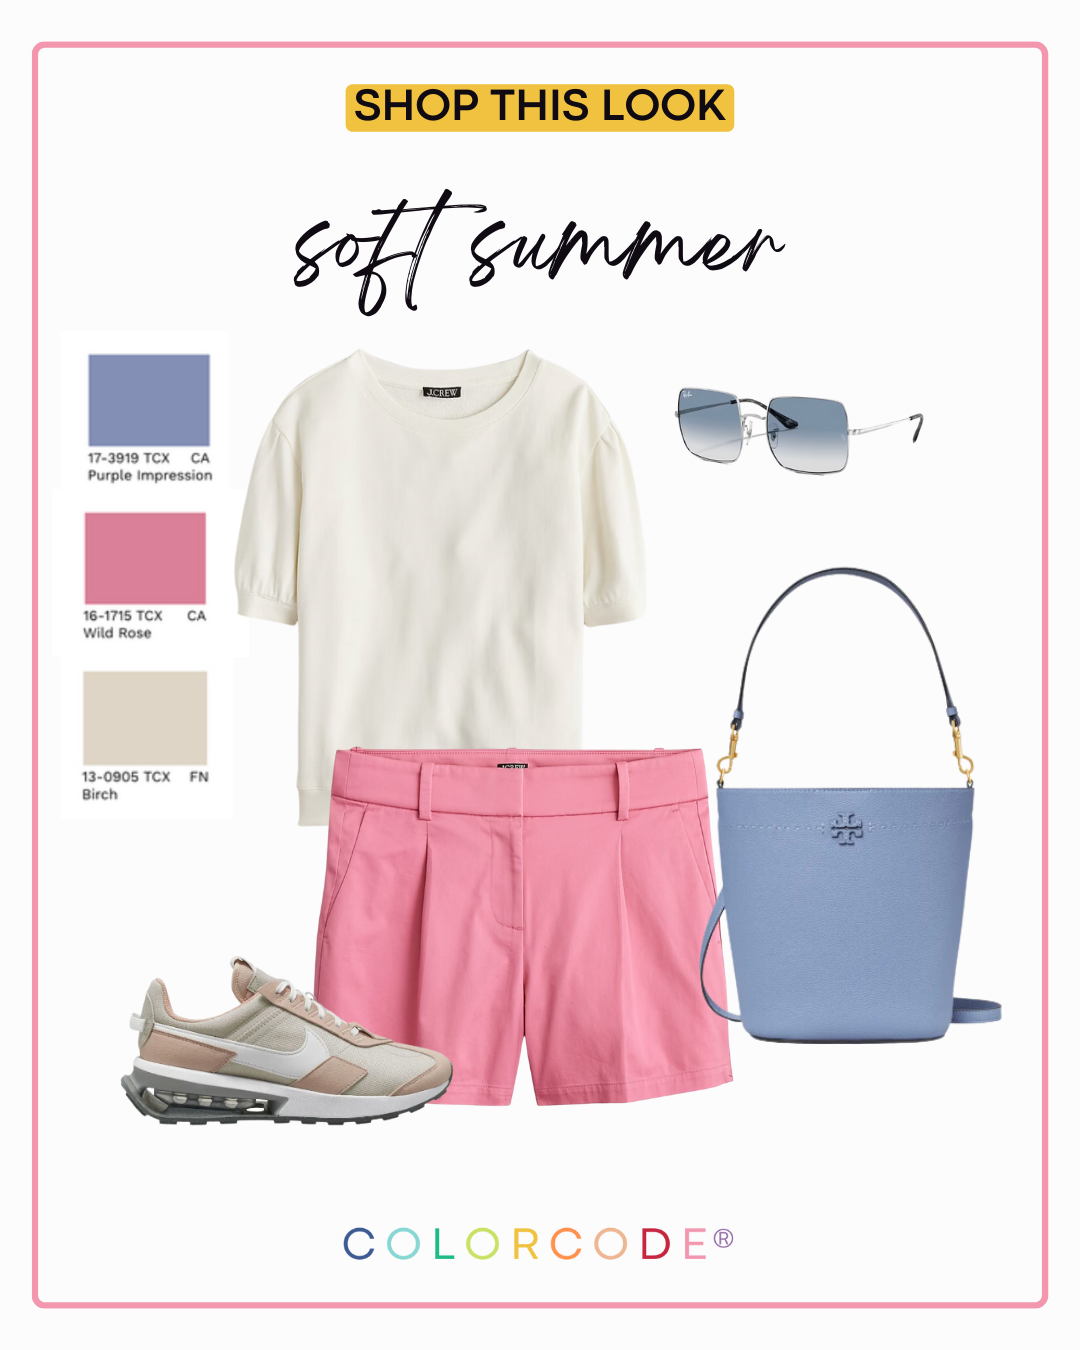 COLORCODE - suit shorts for women - Soft Summer Color Season2